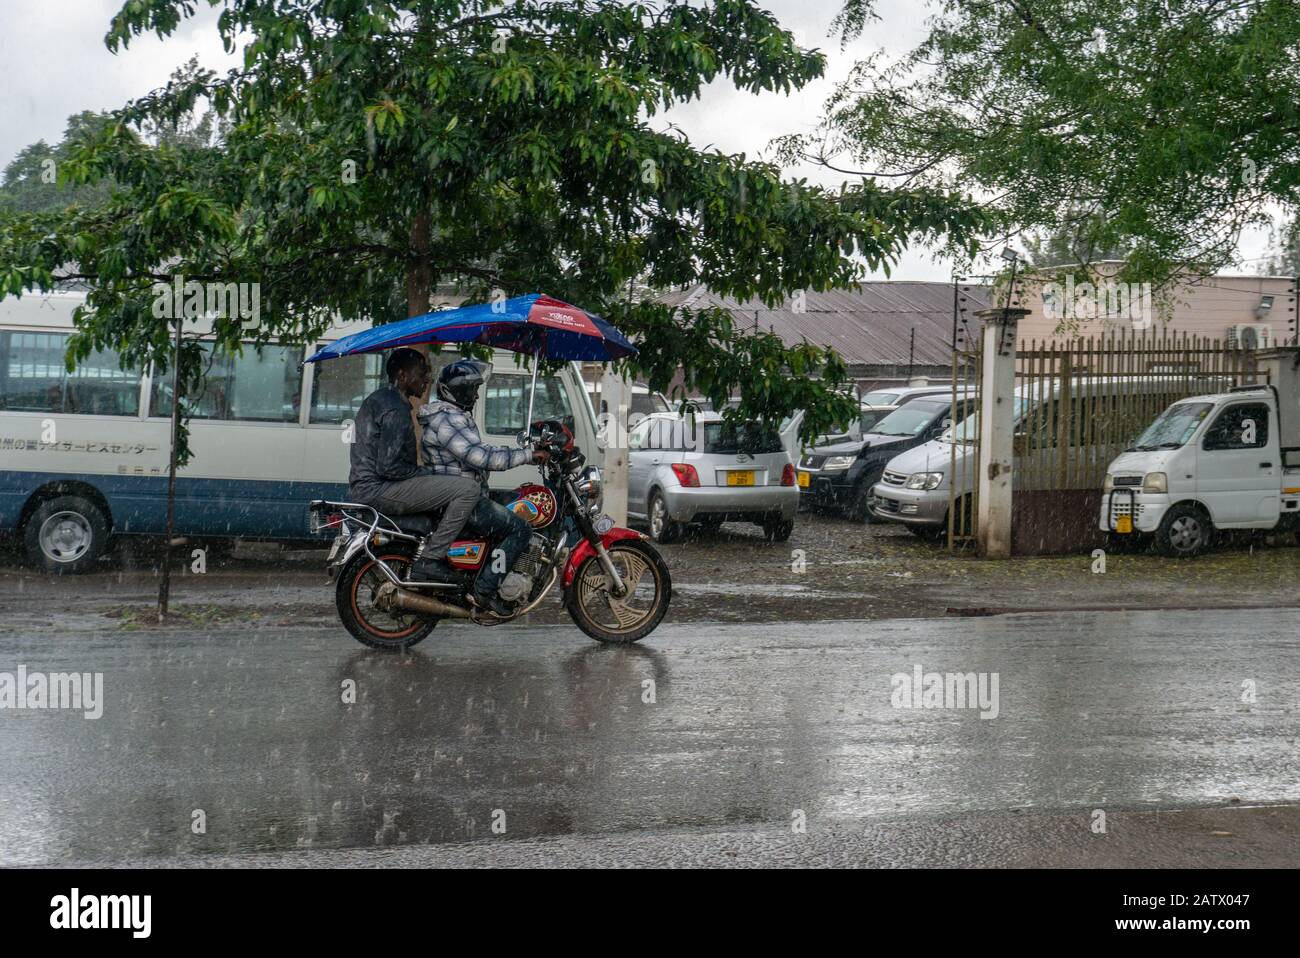 Arusha, Tanzania - 15 Jan 2020: Motorcycle with umbrella - feature of Arusha. People on the street in Arusha city, Tanzania Stock Photo